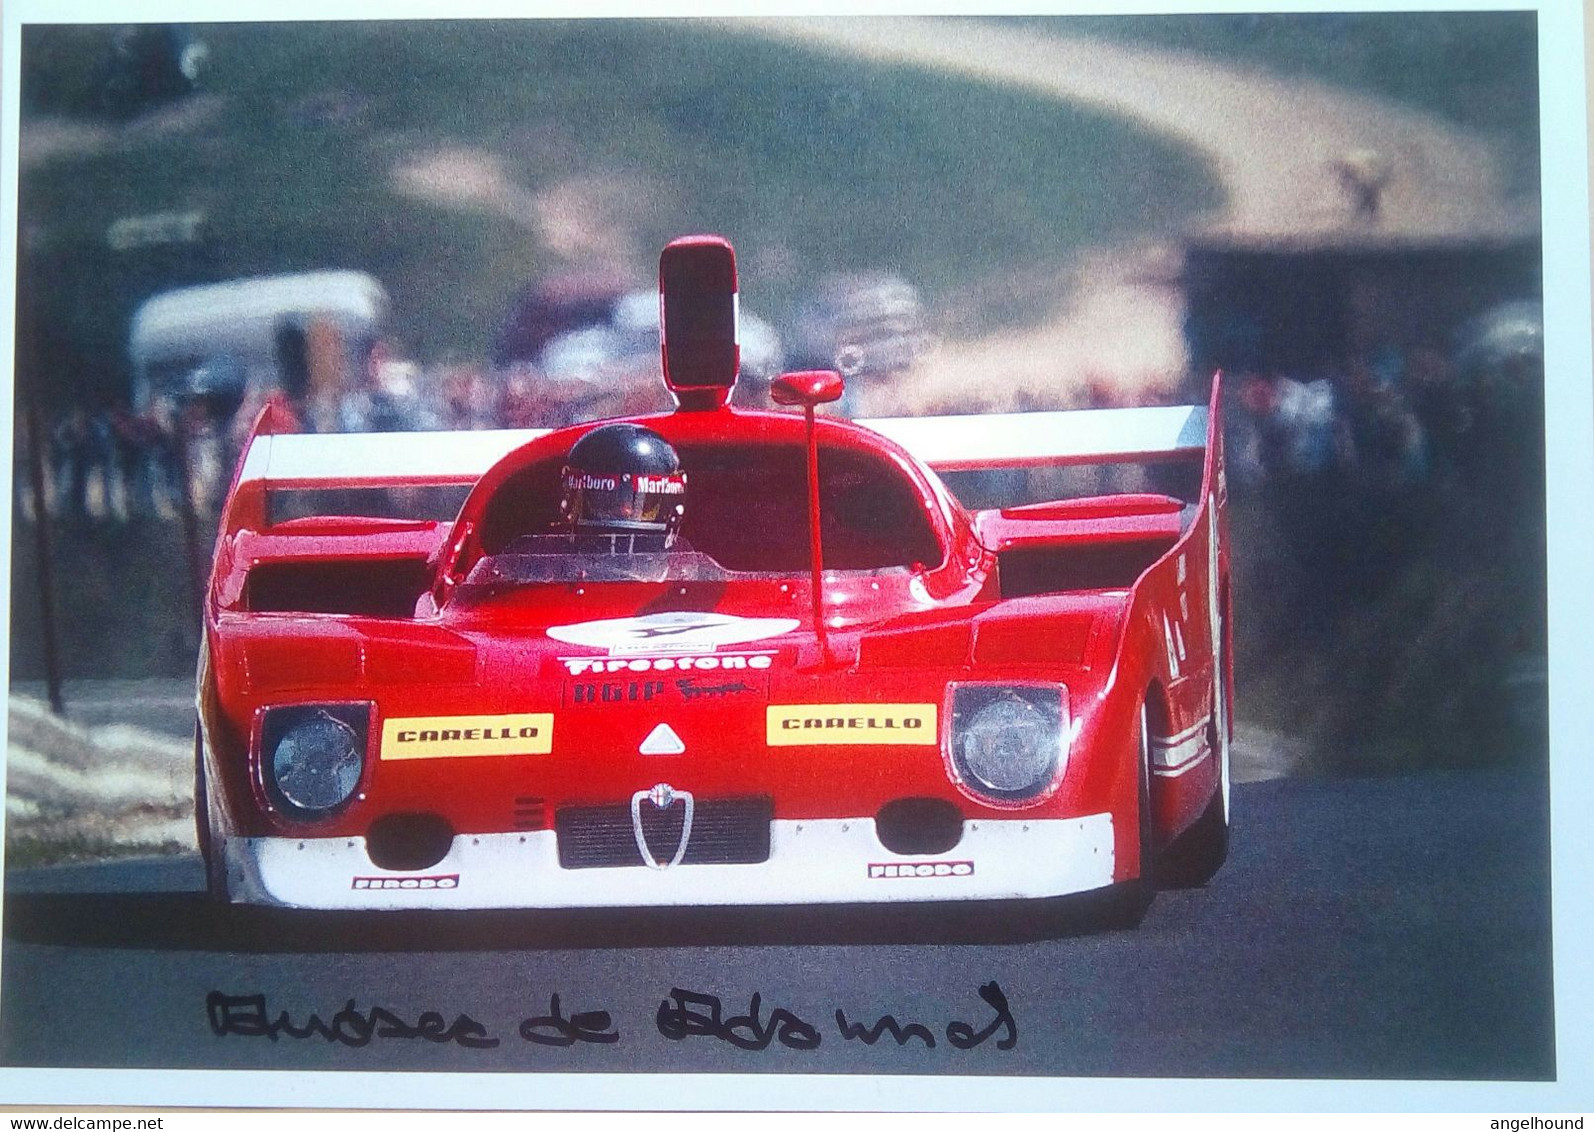 Andrea De Adamich ( Italian Race Car Driver) - Handtekening